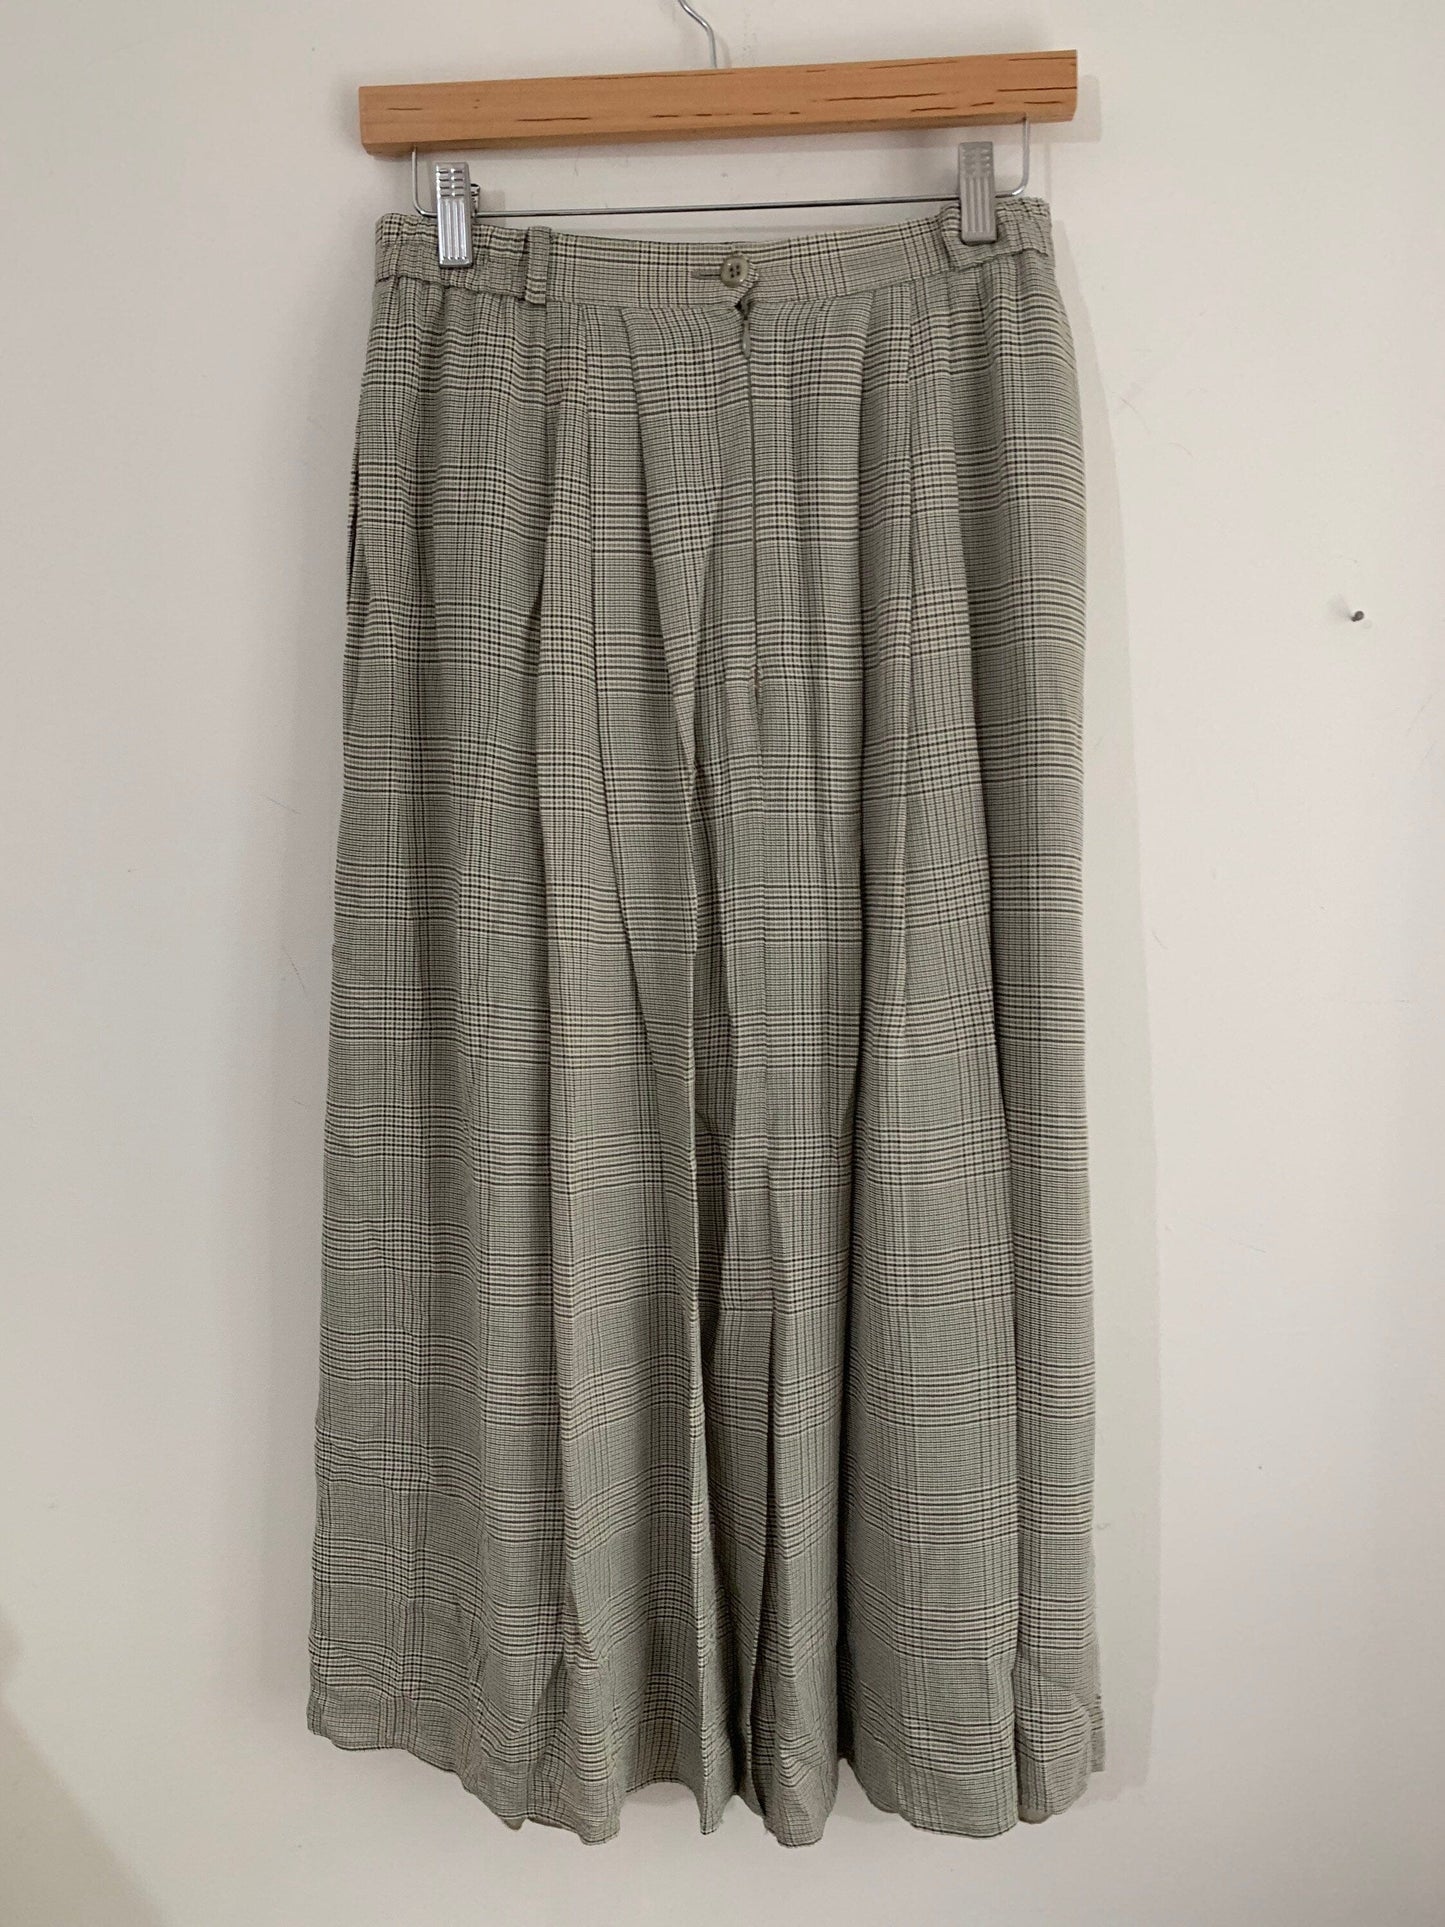 Vintage Gardeur Skirt Midi Length Grey Green Checked  UK 12/14 With pockets